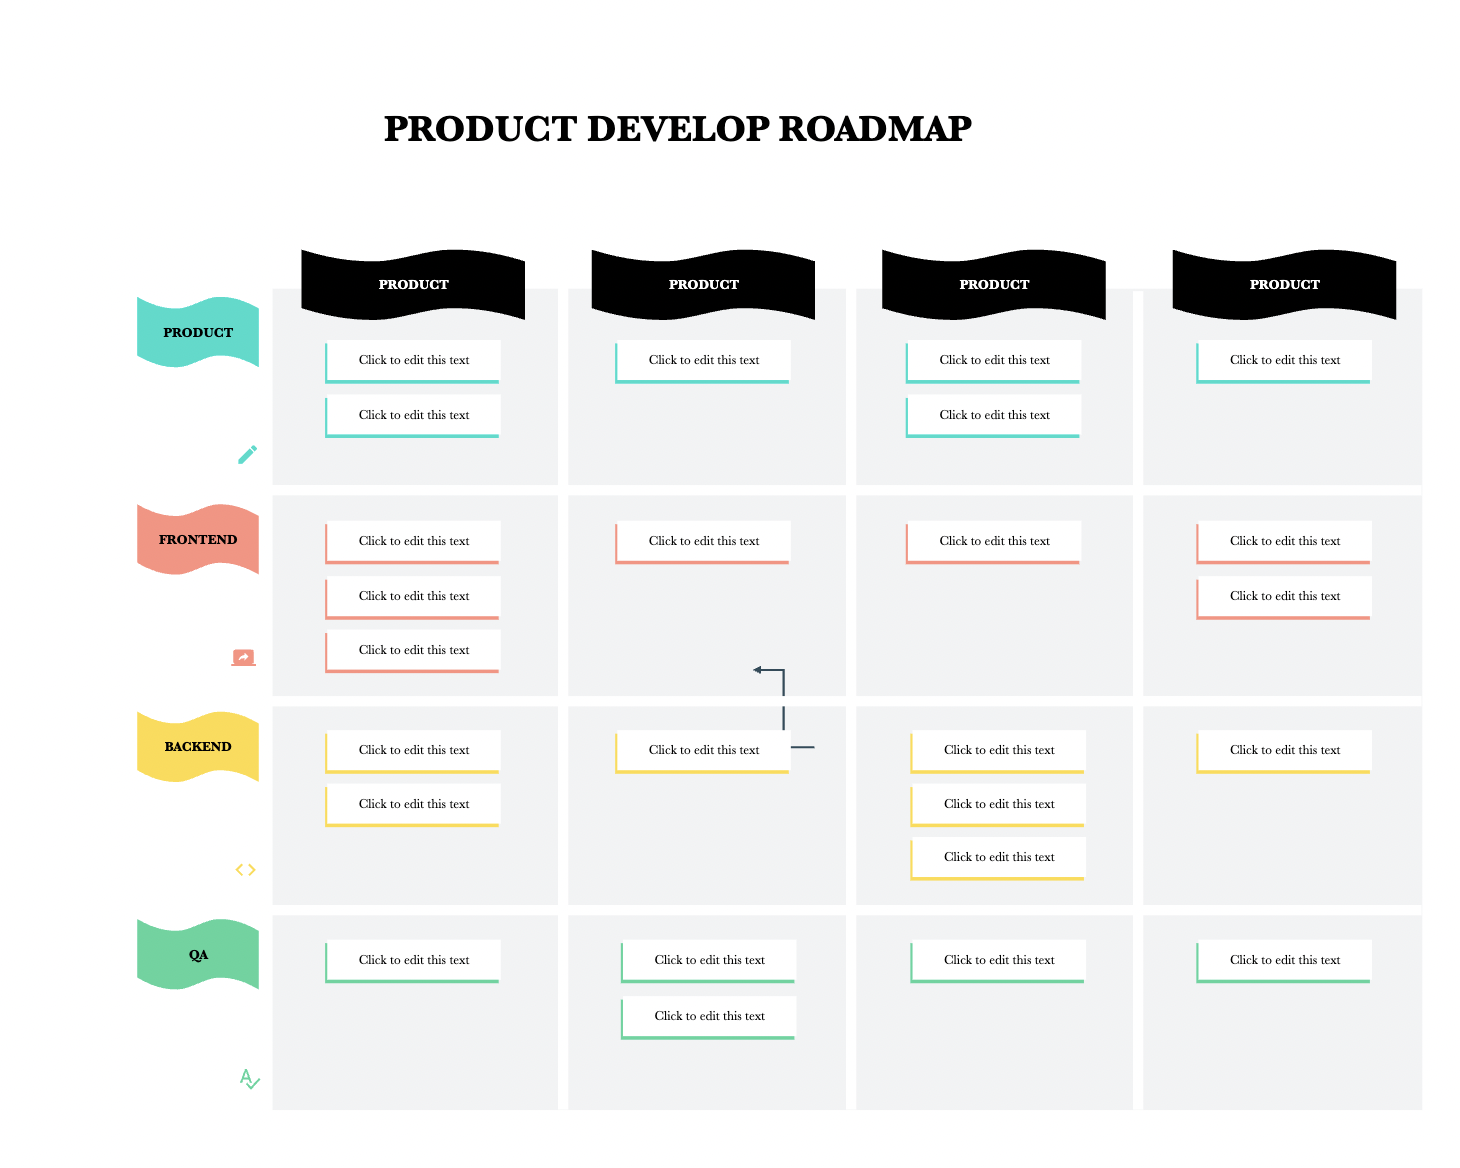 17. Product Develop Roadmap